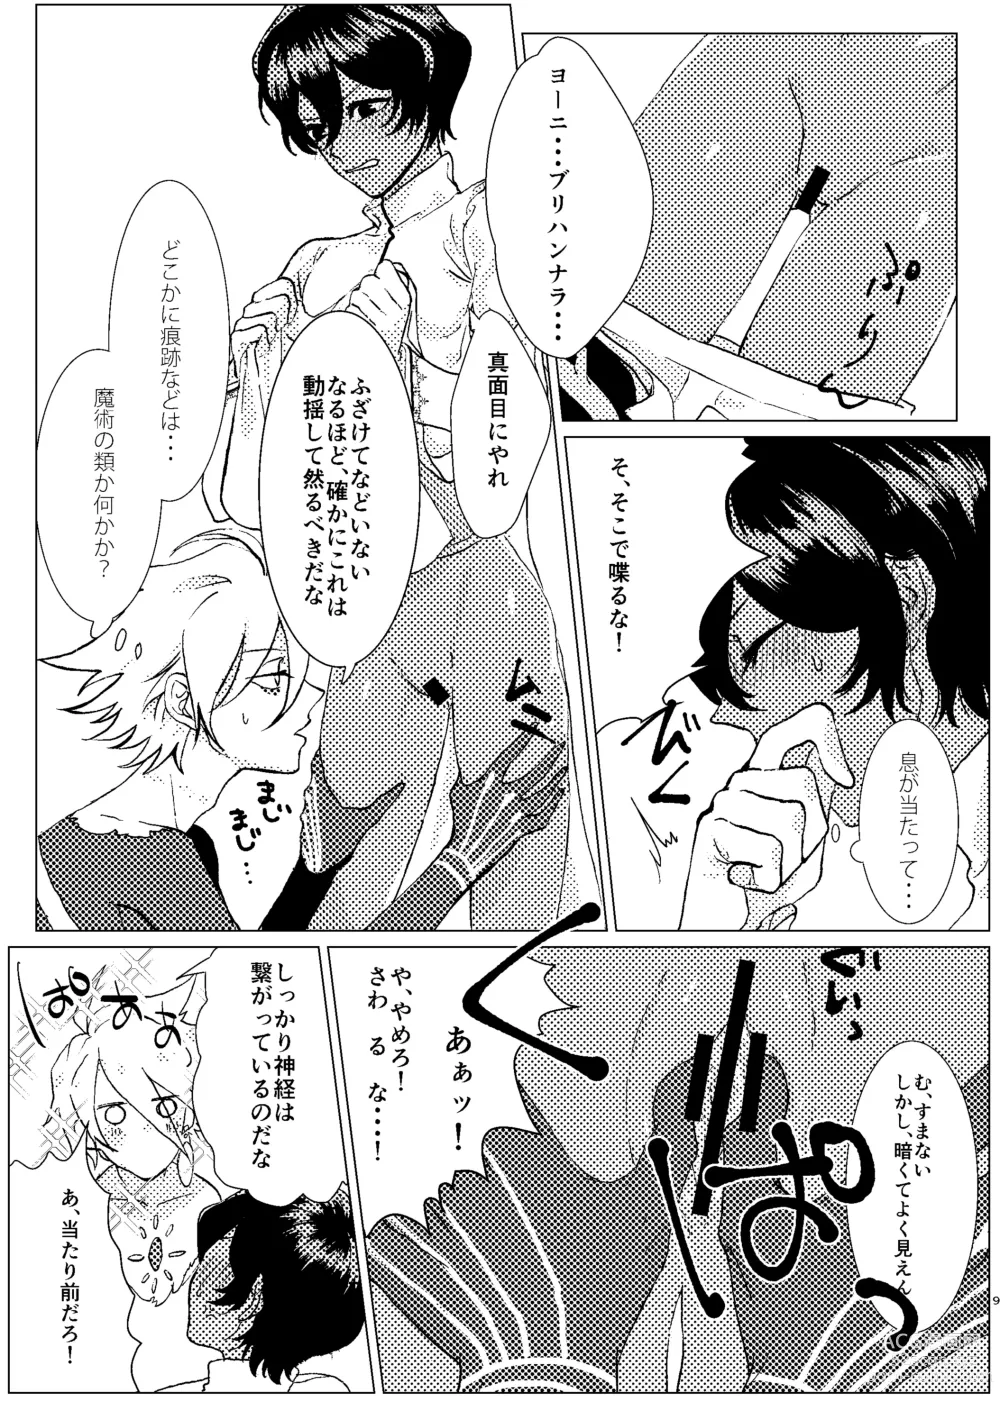 Page 8 of doujinshi honeydew nightmare